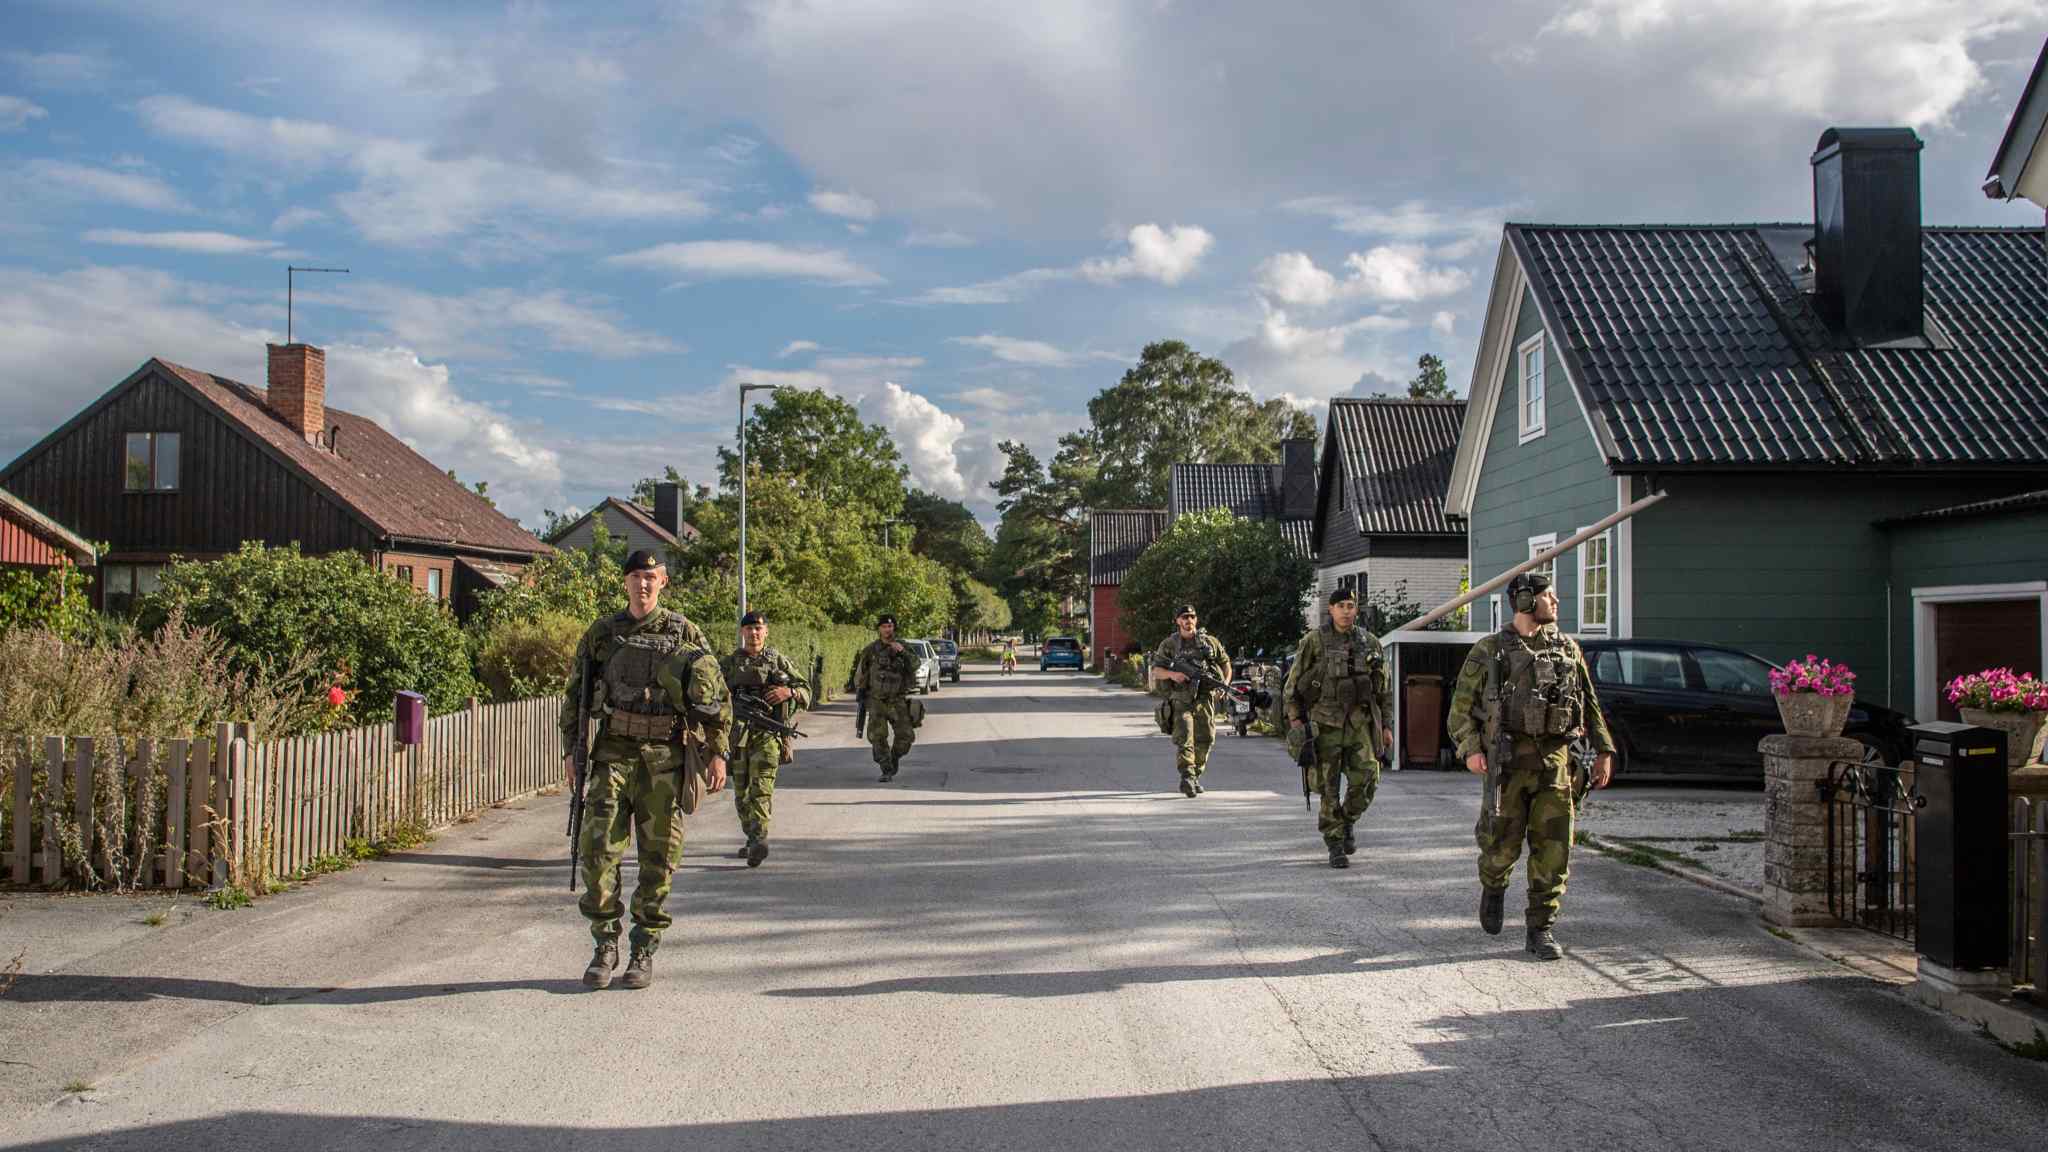 Life on the idyllic Swedish island where WW3 could start